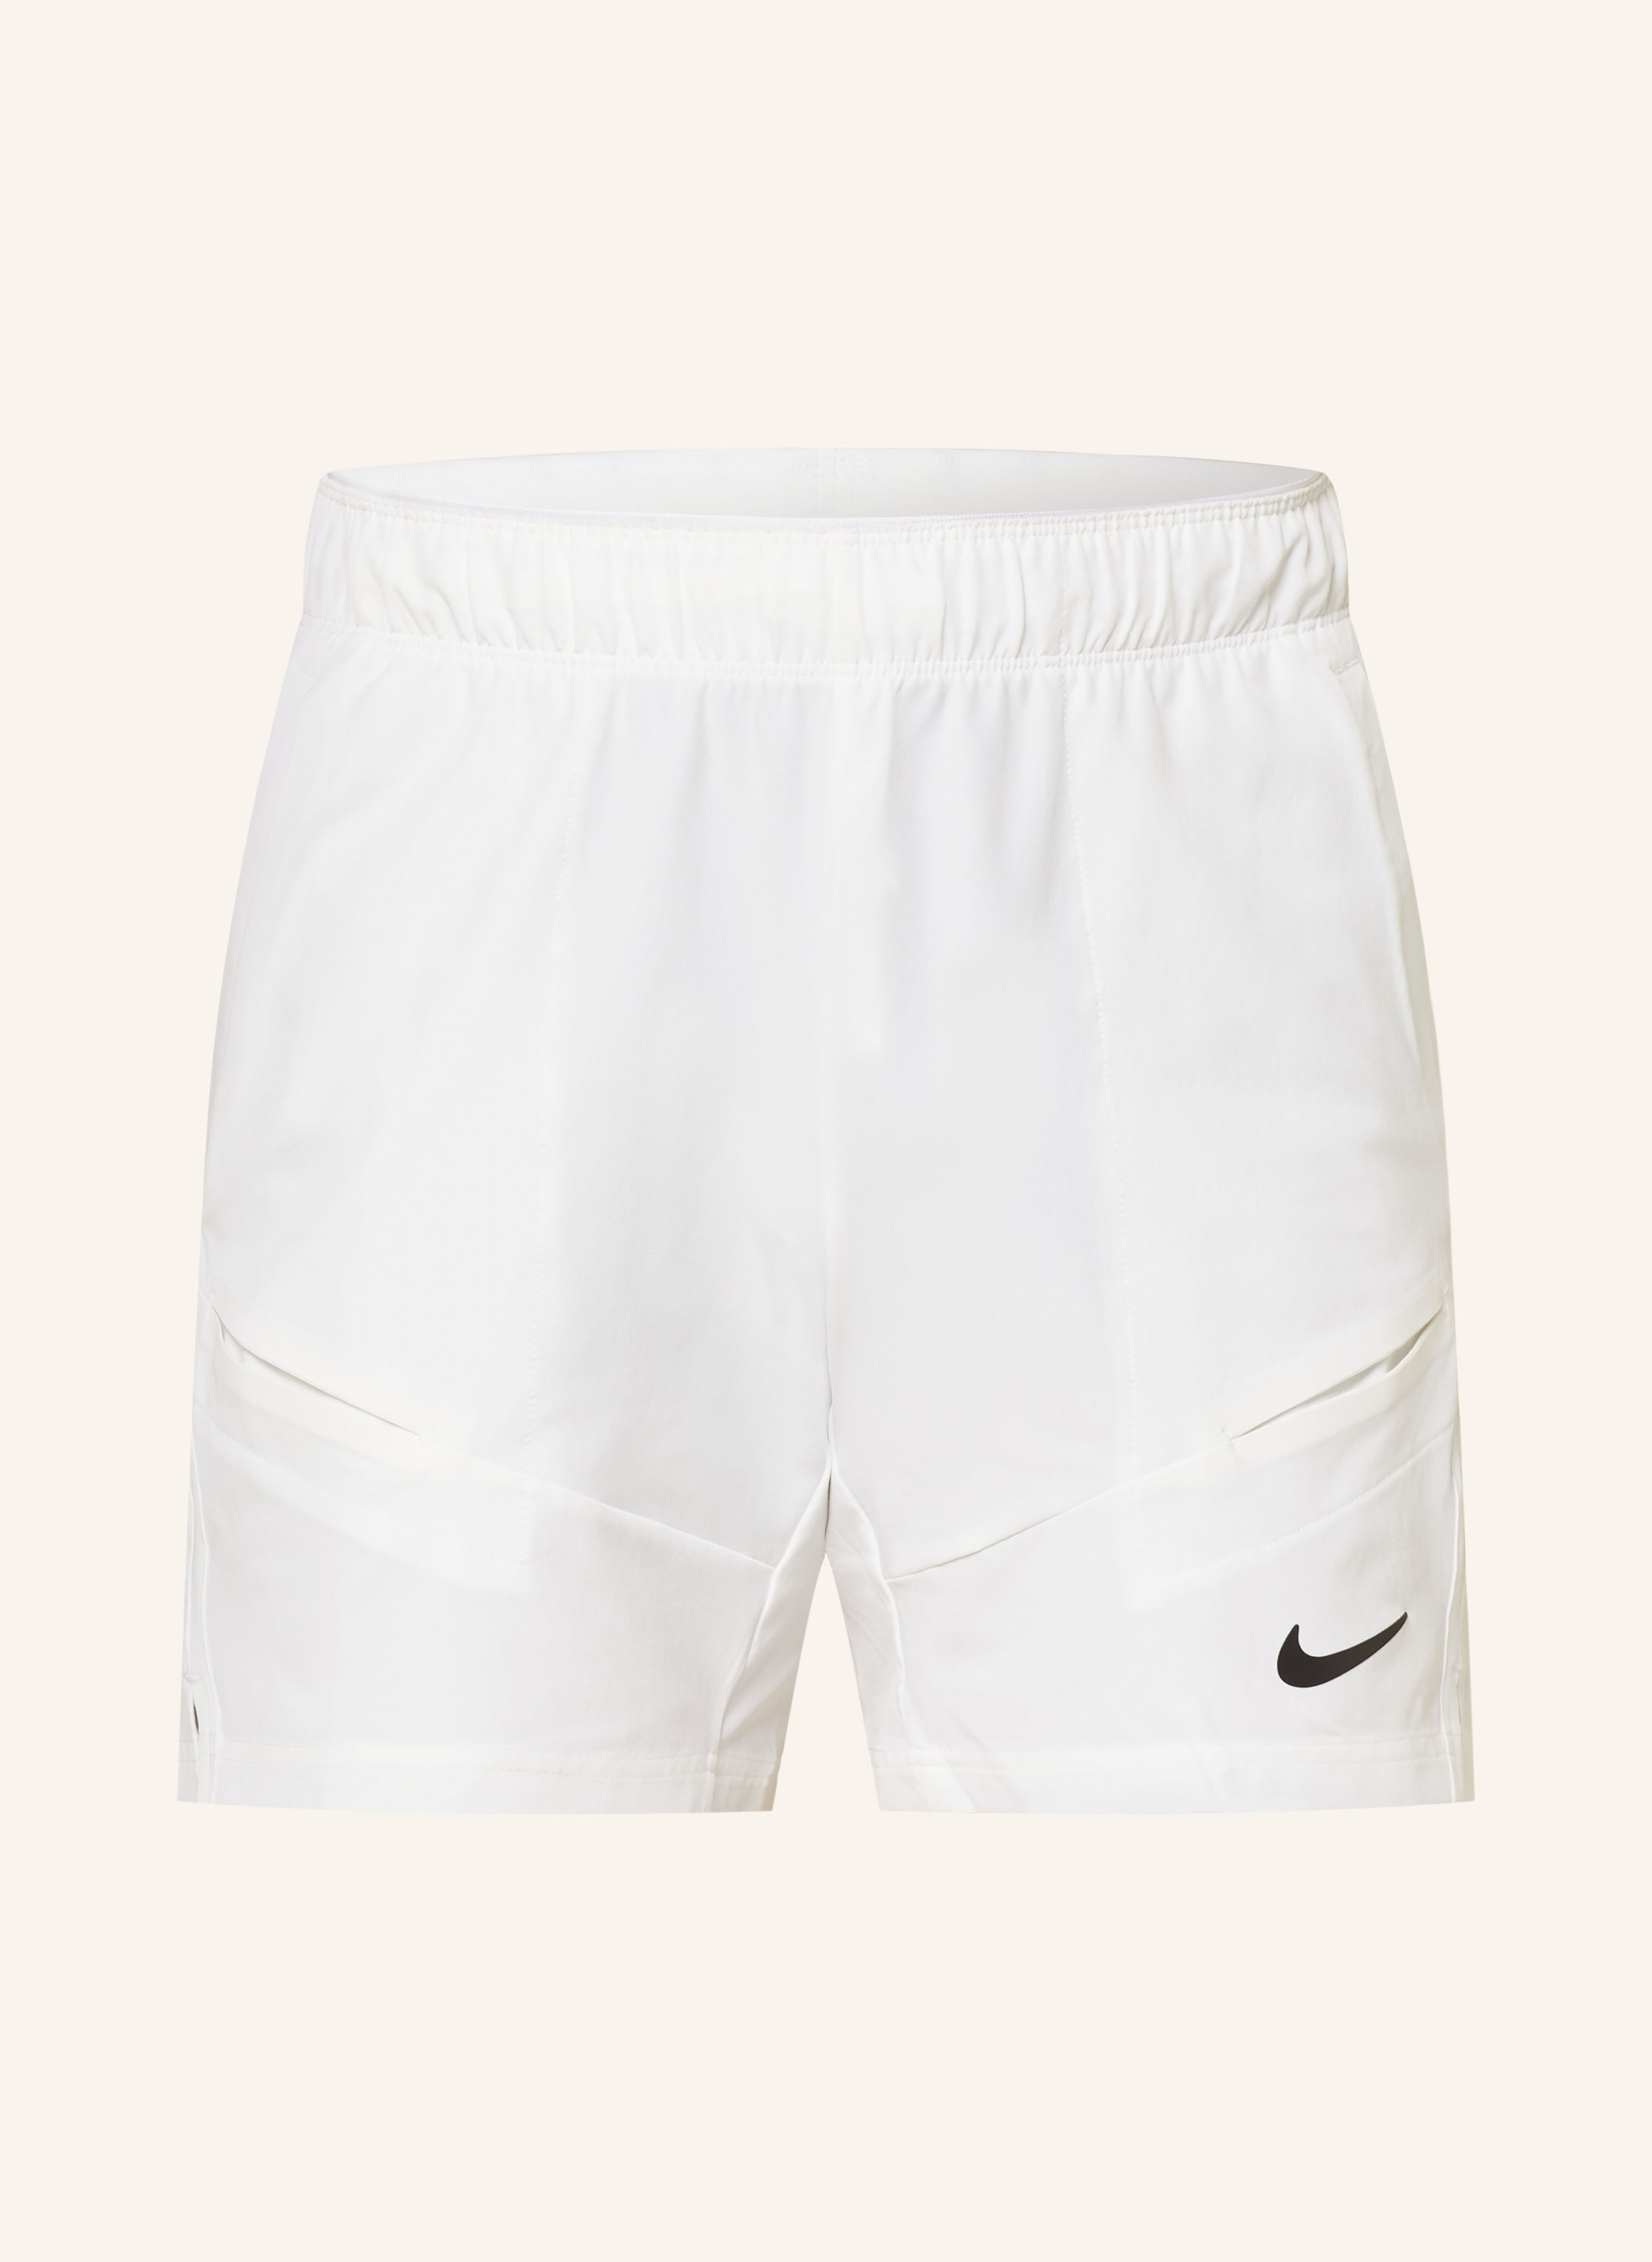 Nike Court Flex Ace Men's Tennis Shorts - Obsidian/White